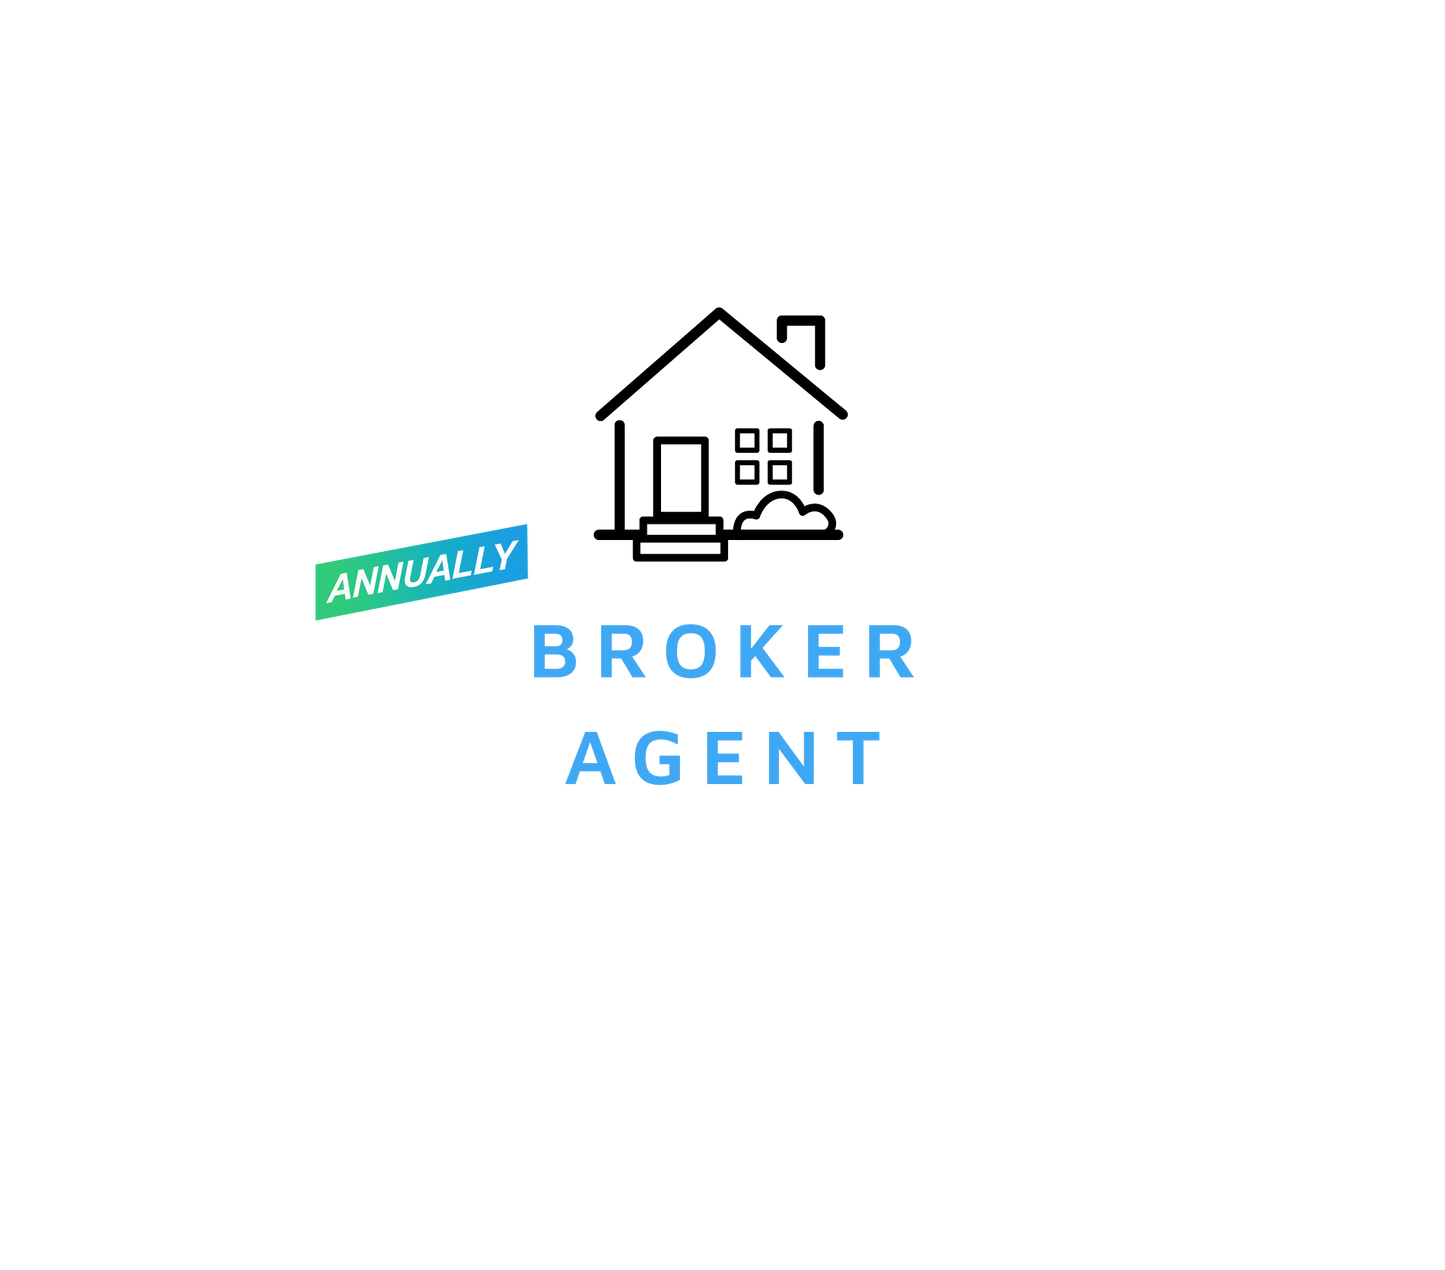 Broker Agent - Presentations